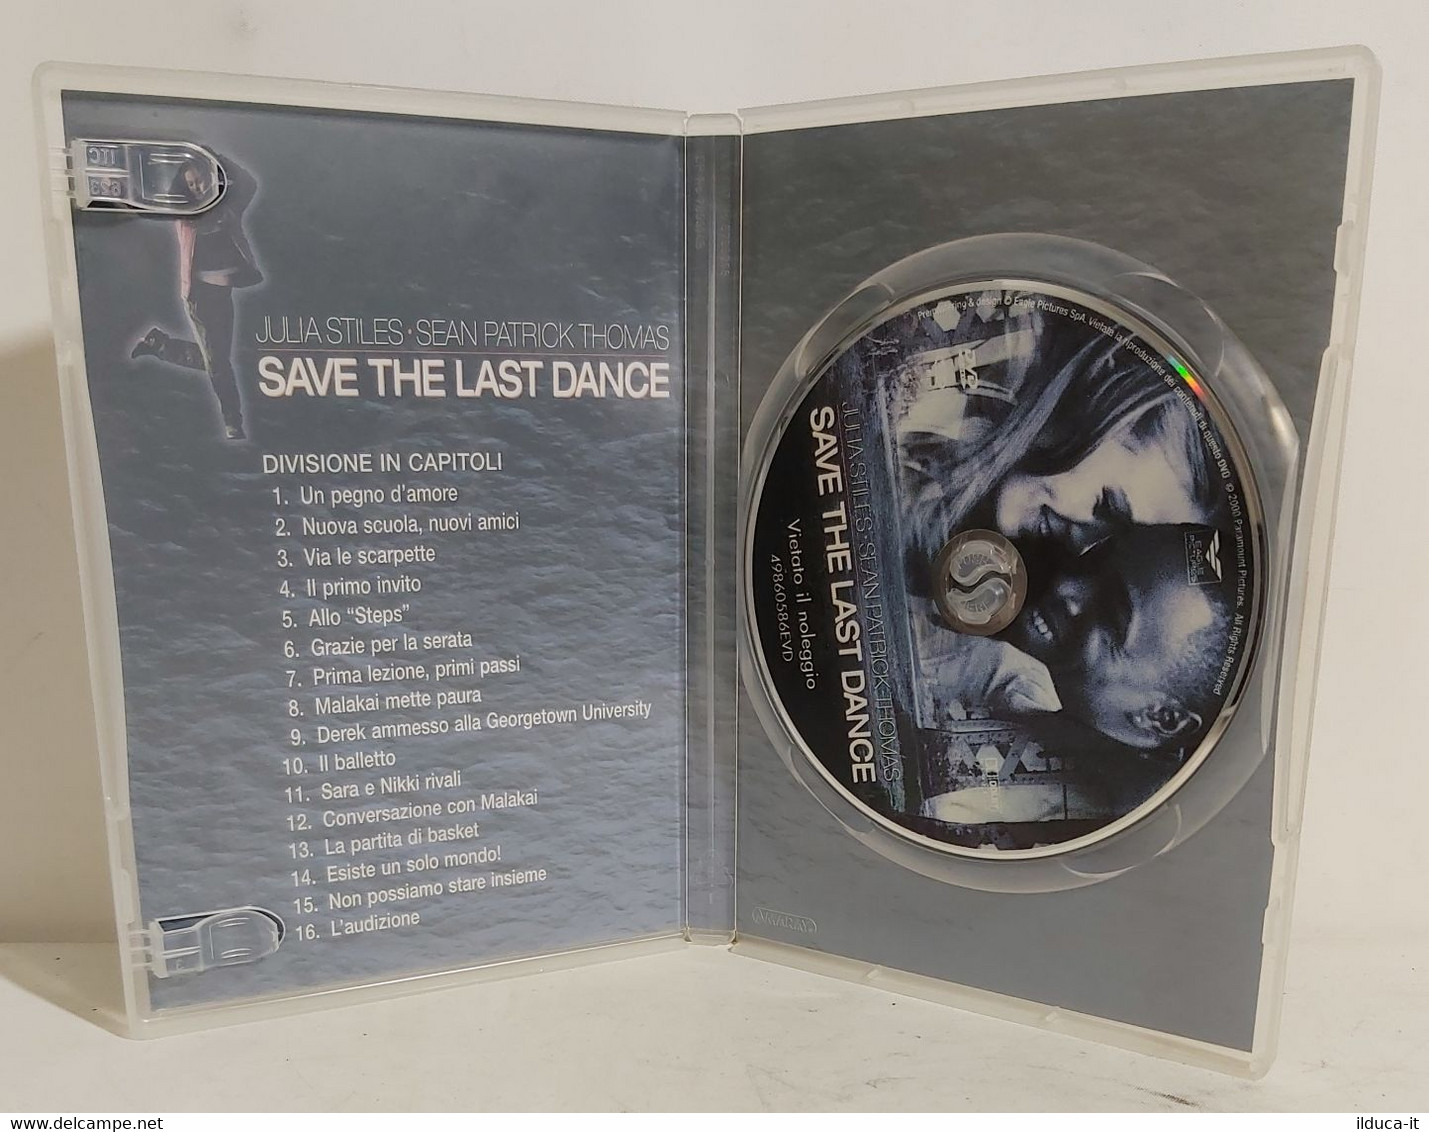 I101492 DVD - Save The Last Dance - Julia Stiles Sean Patrick Thomas - Romantic